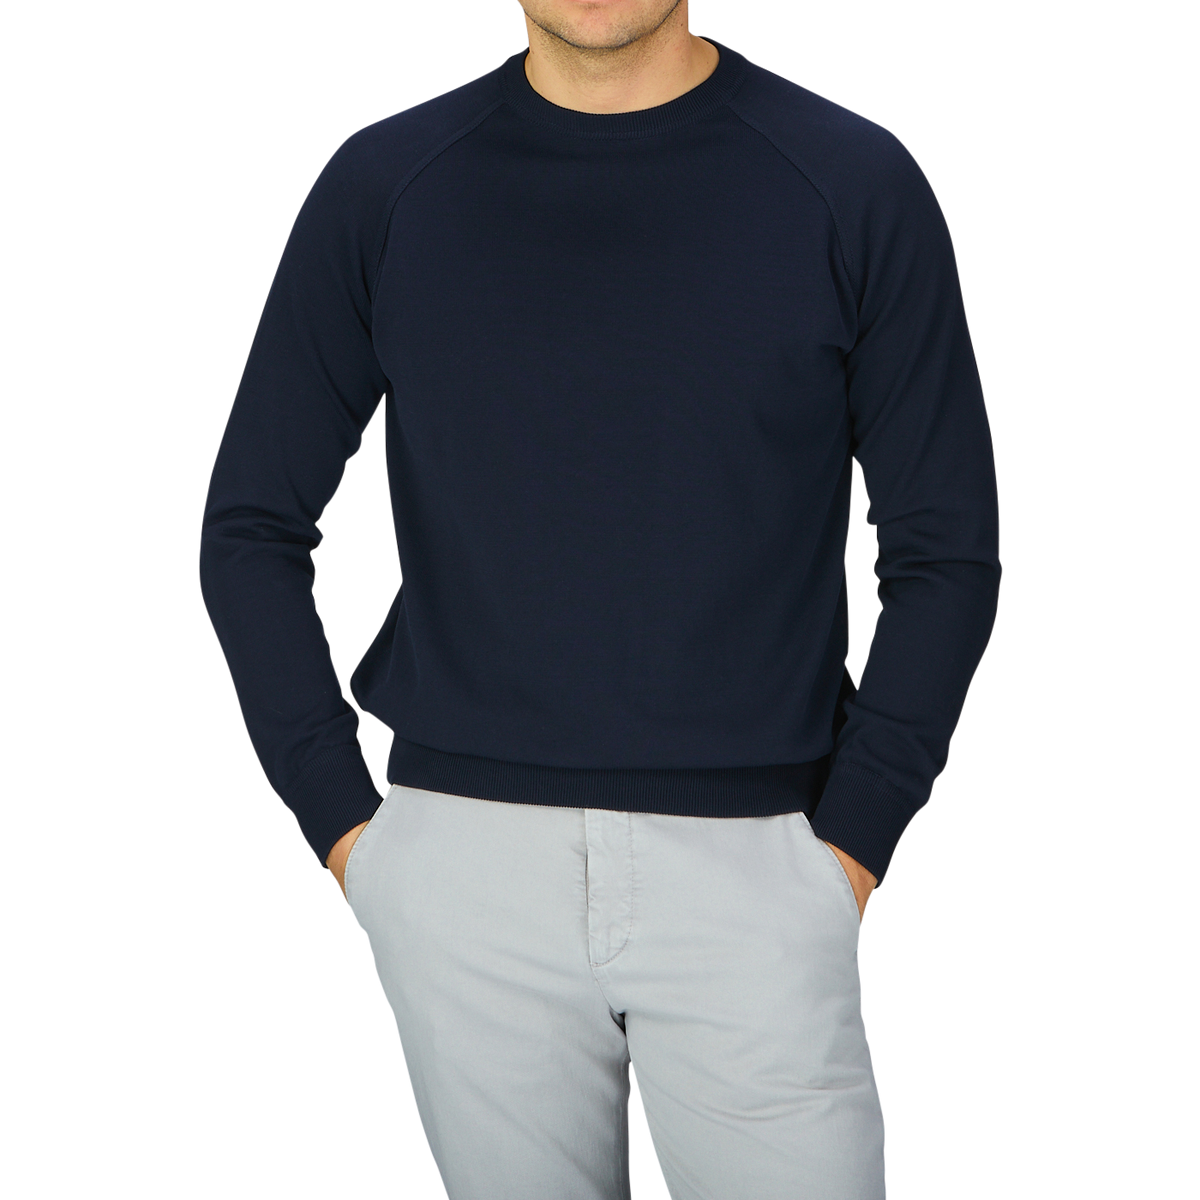 A man wearing a Filippo de Laurentiis navy blue crepe cotton crew neck sweater and grey pants.